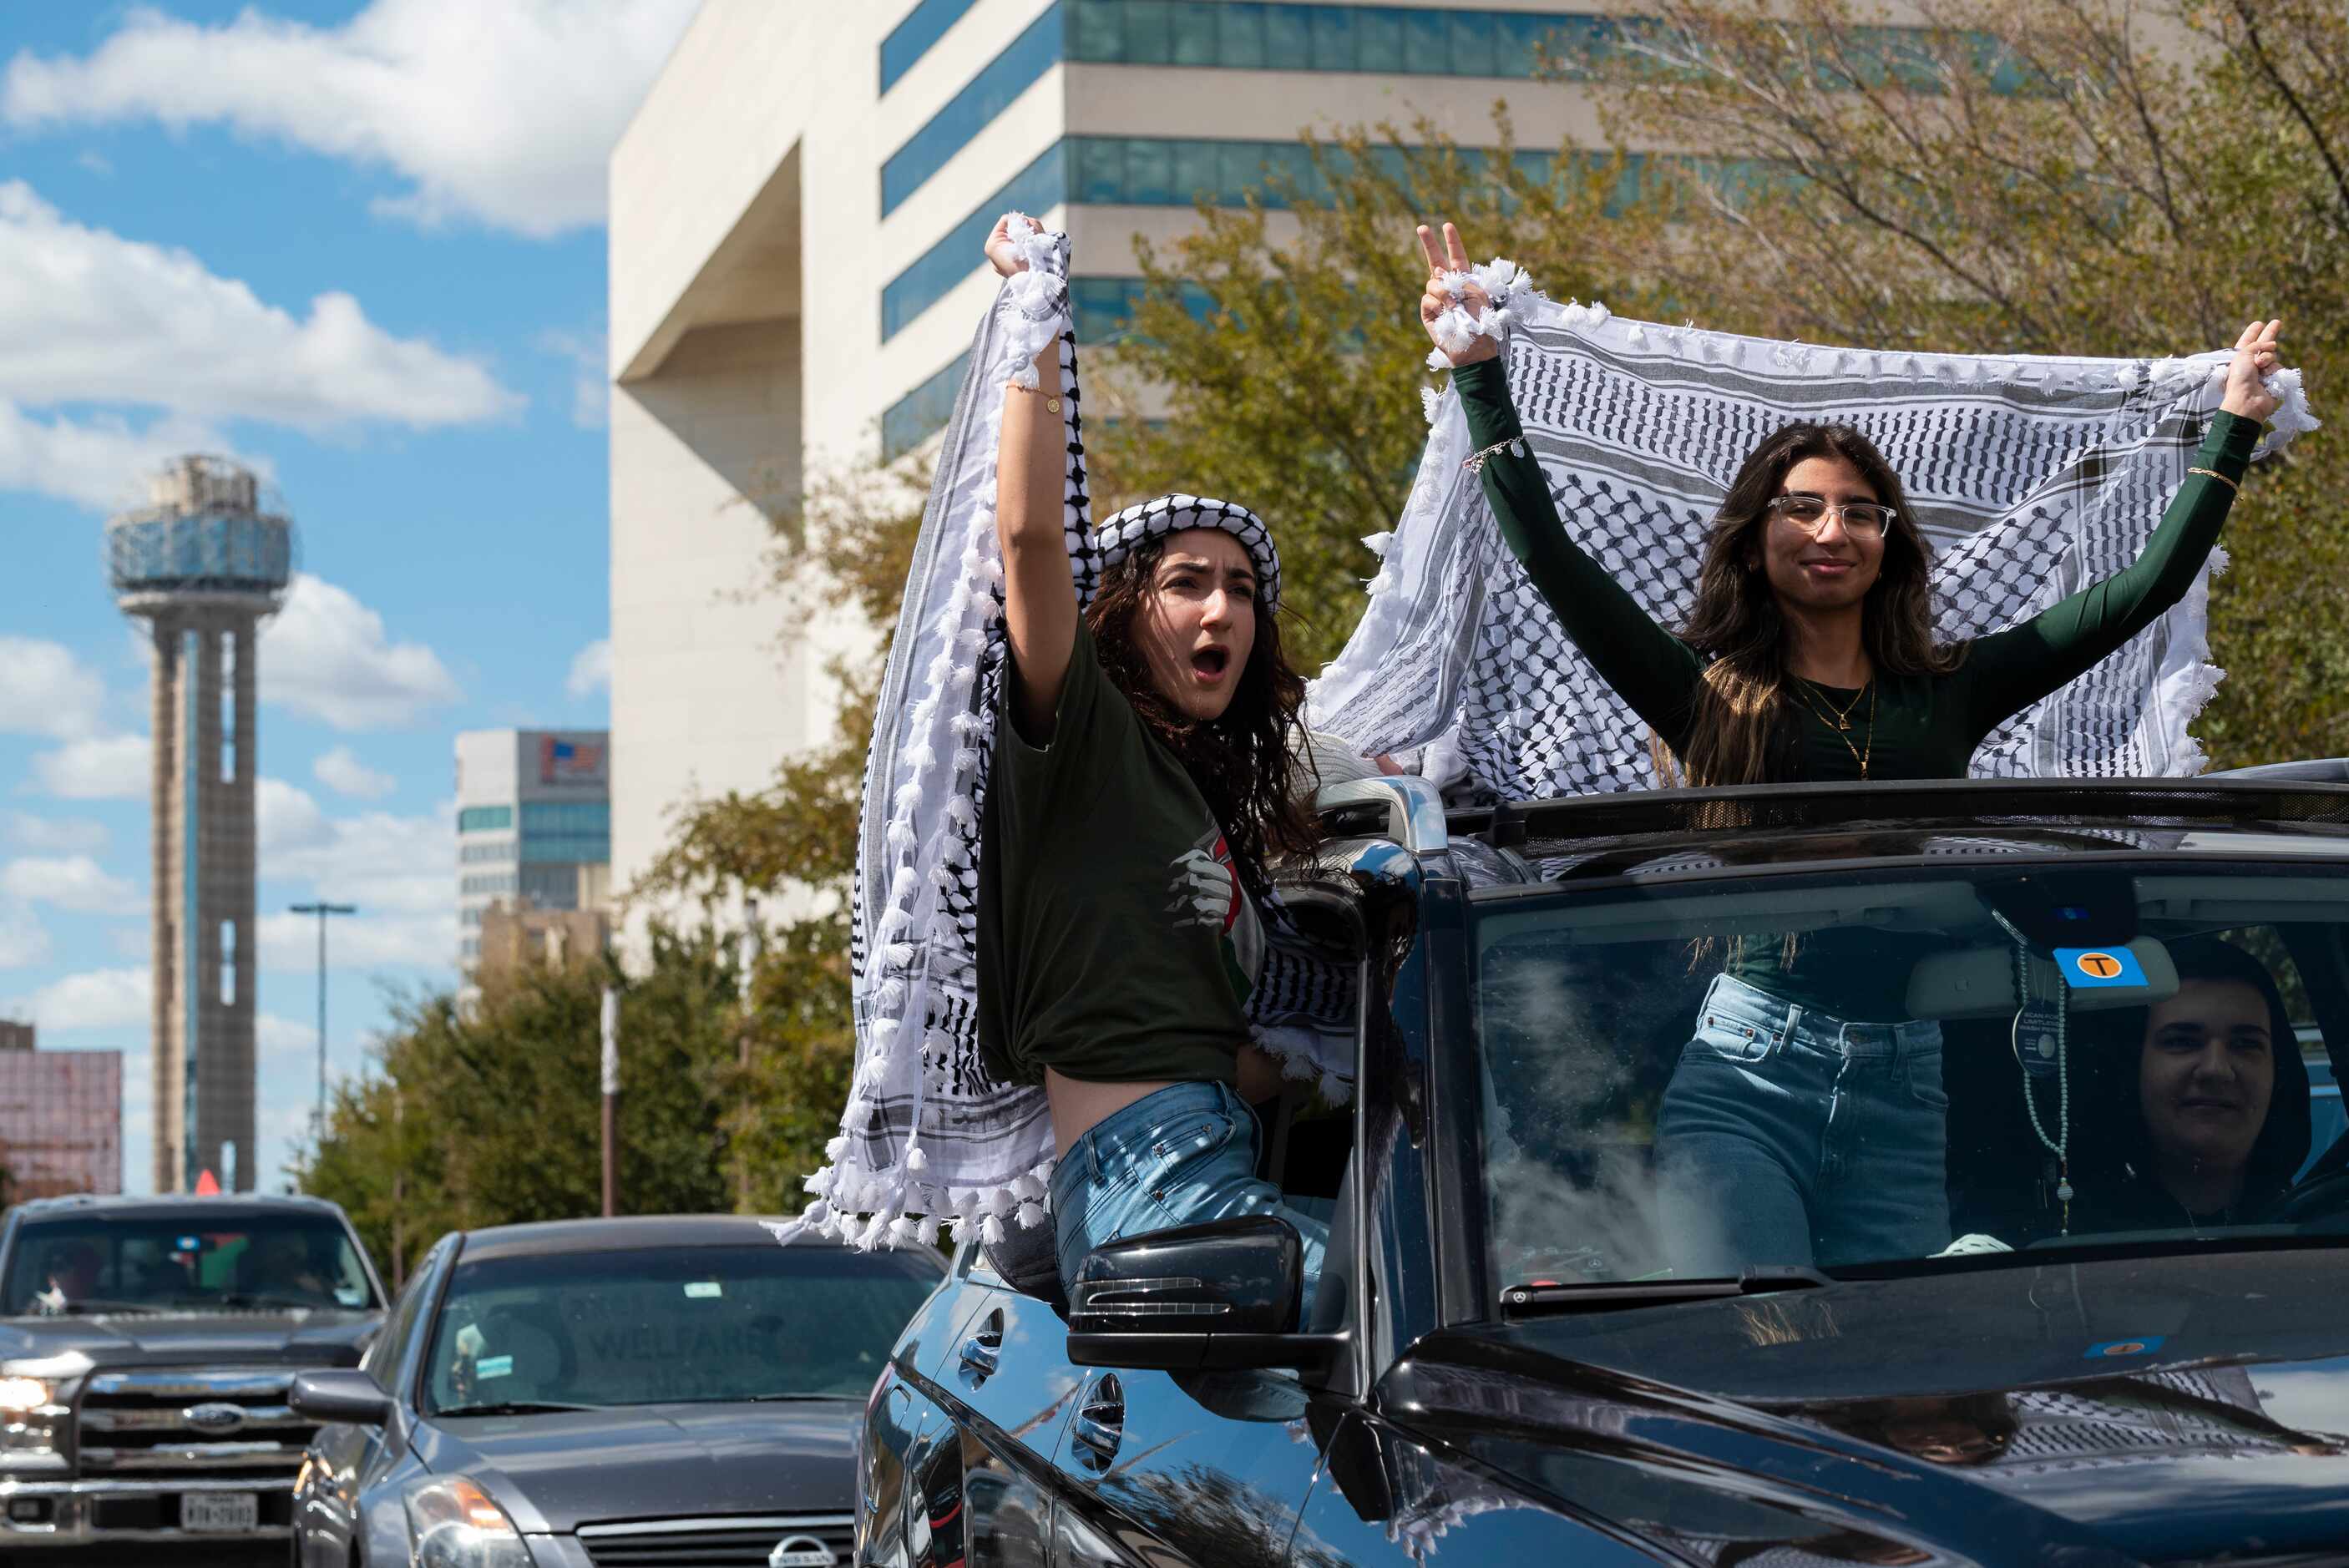 Manar Khalaf, 19, left, and Haya Sharif, 19, wave traditional Palestinian clothing and...